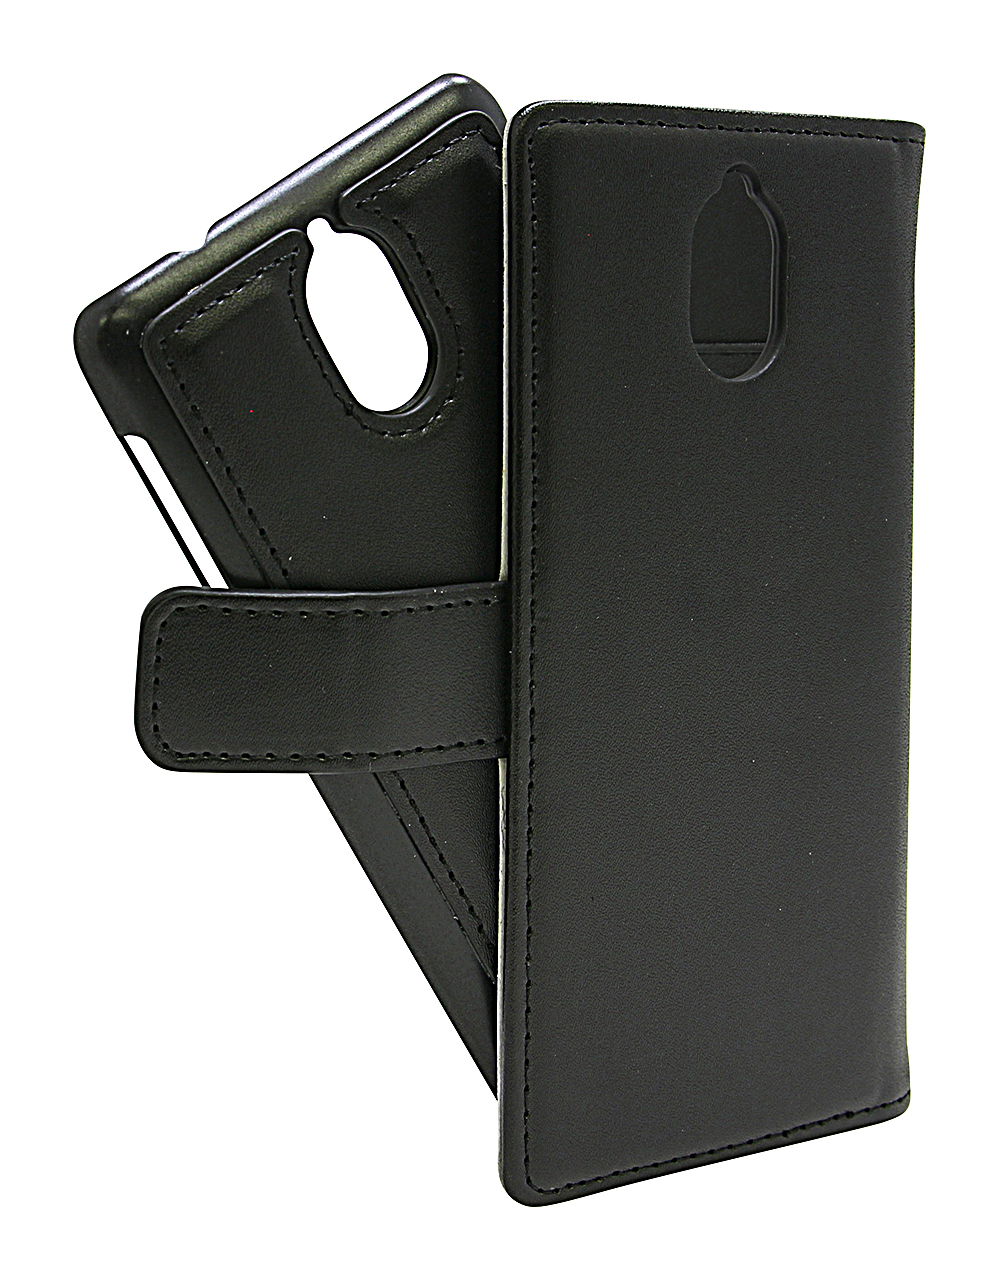 Skimblocker Magnet Wallet Nokia 3.1 (2018)